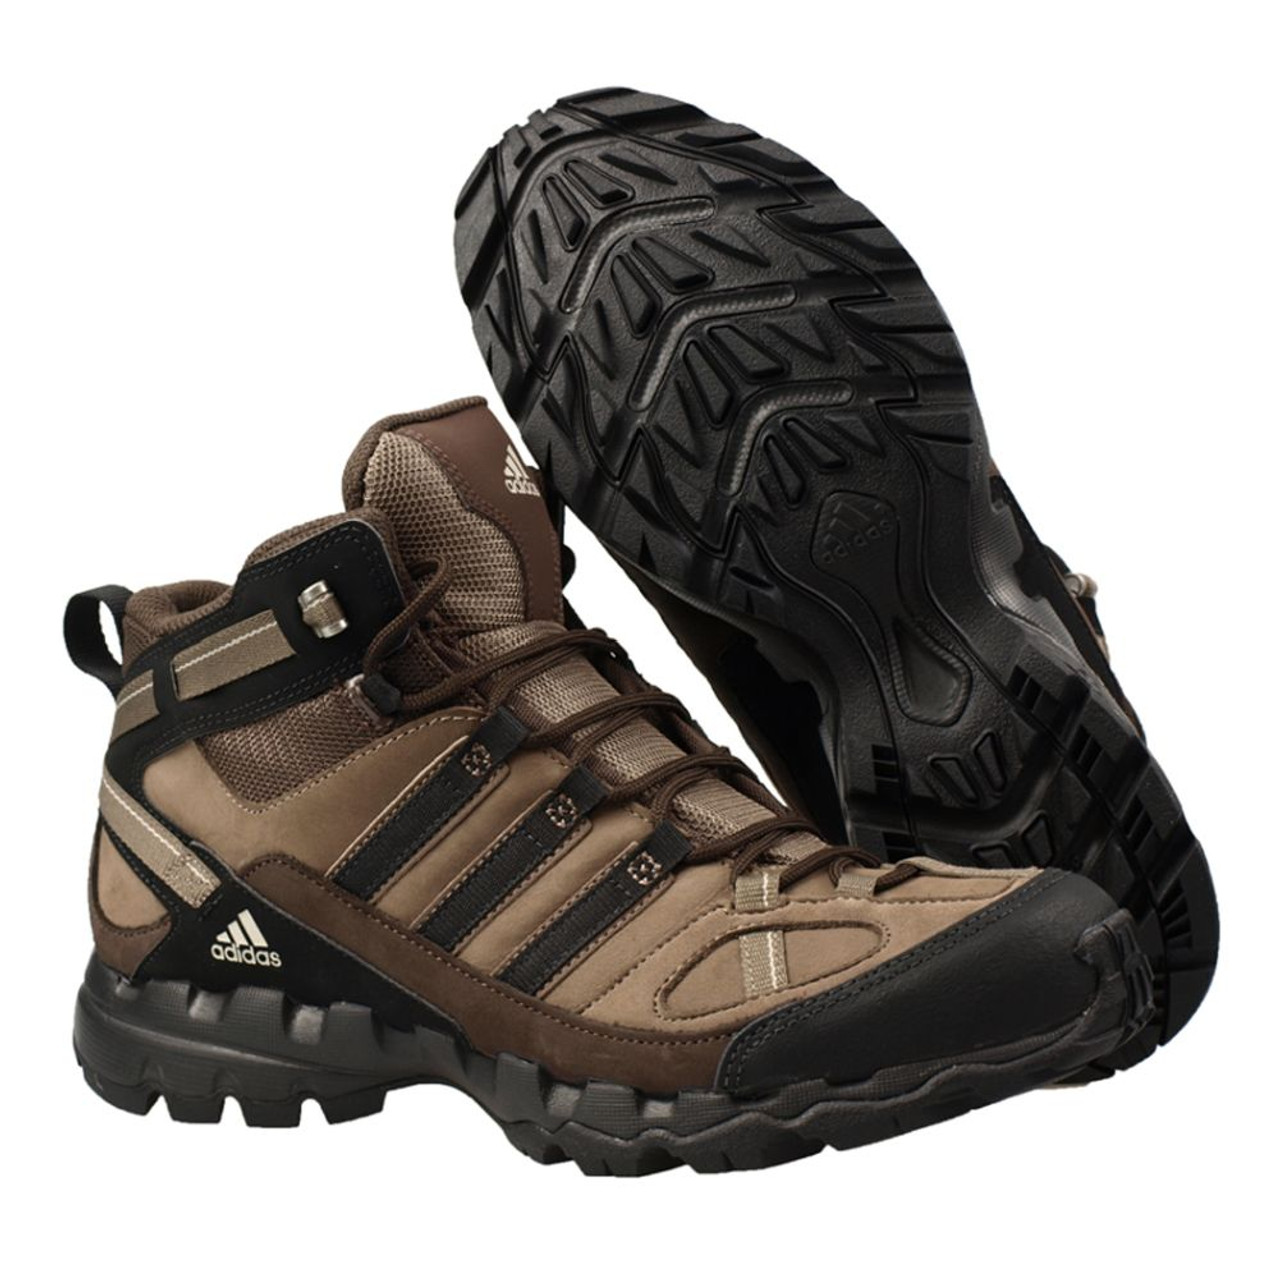 Adidas Ax Mid Leather Brown/Black Mens Hiking Boots - Grey Blend/Black/Collegi | Discount Adidas Men's Athletic Shoes & More Shoolu.com Shoolu.com